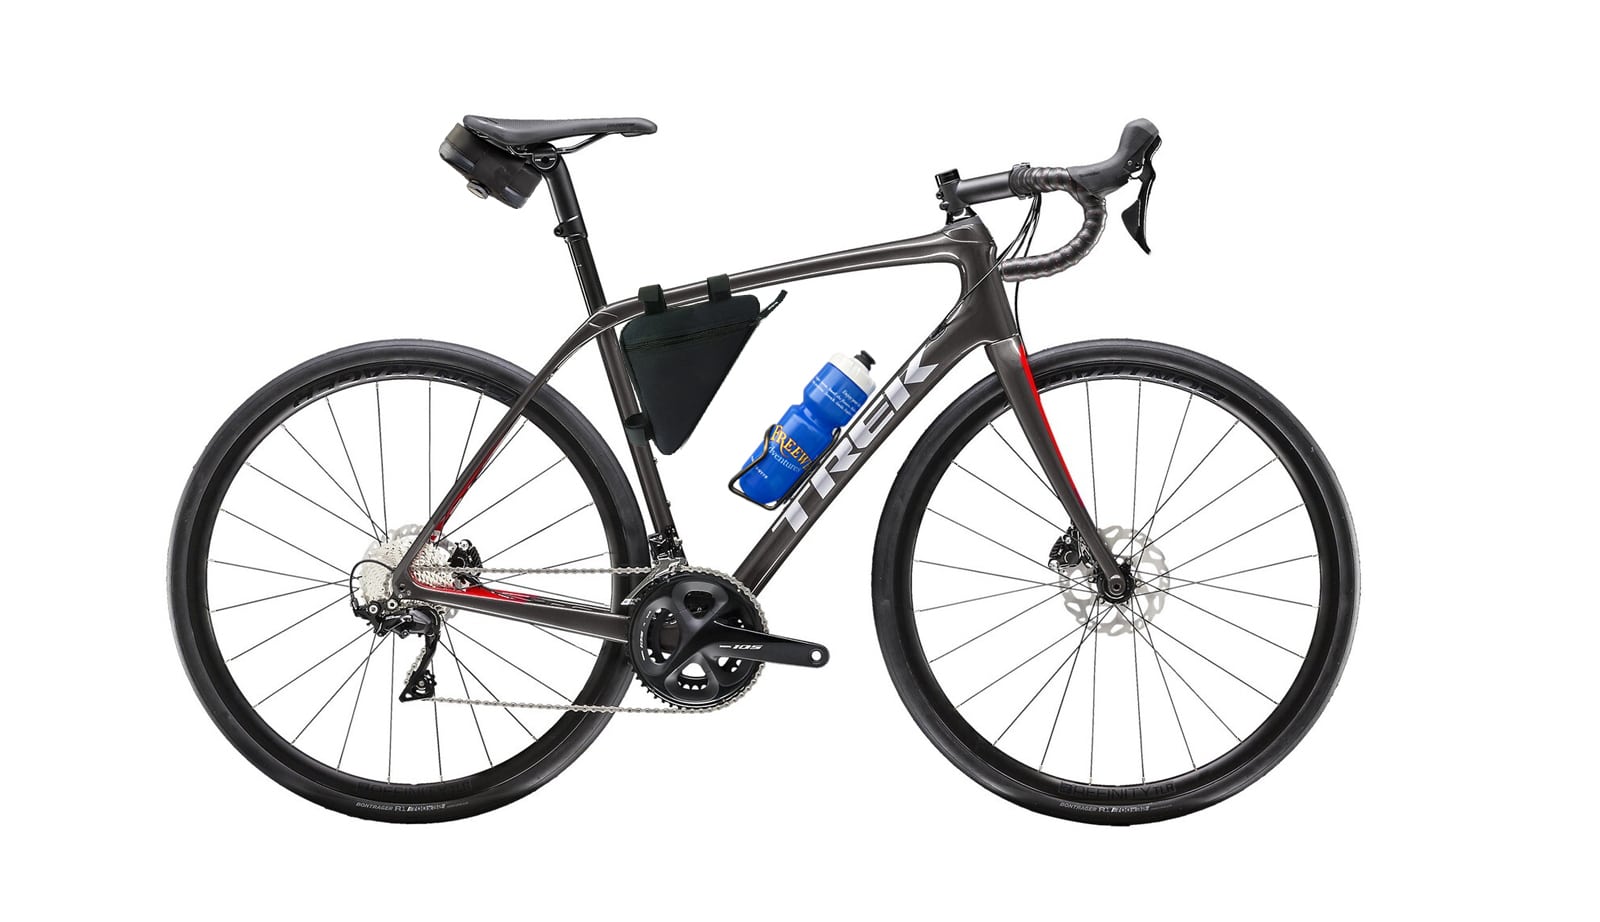 Trek carbon fiber road bike available to rent